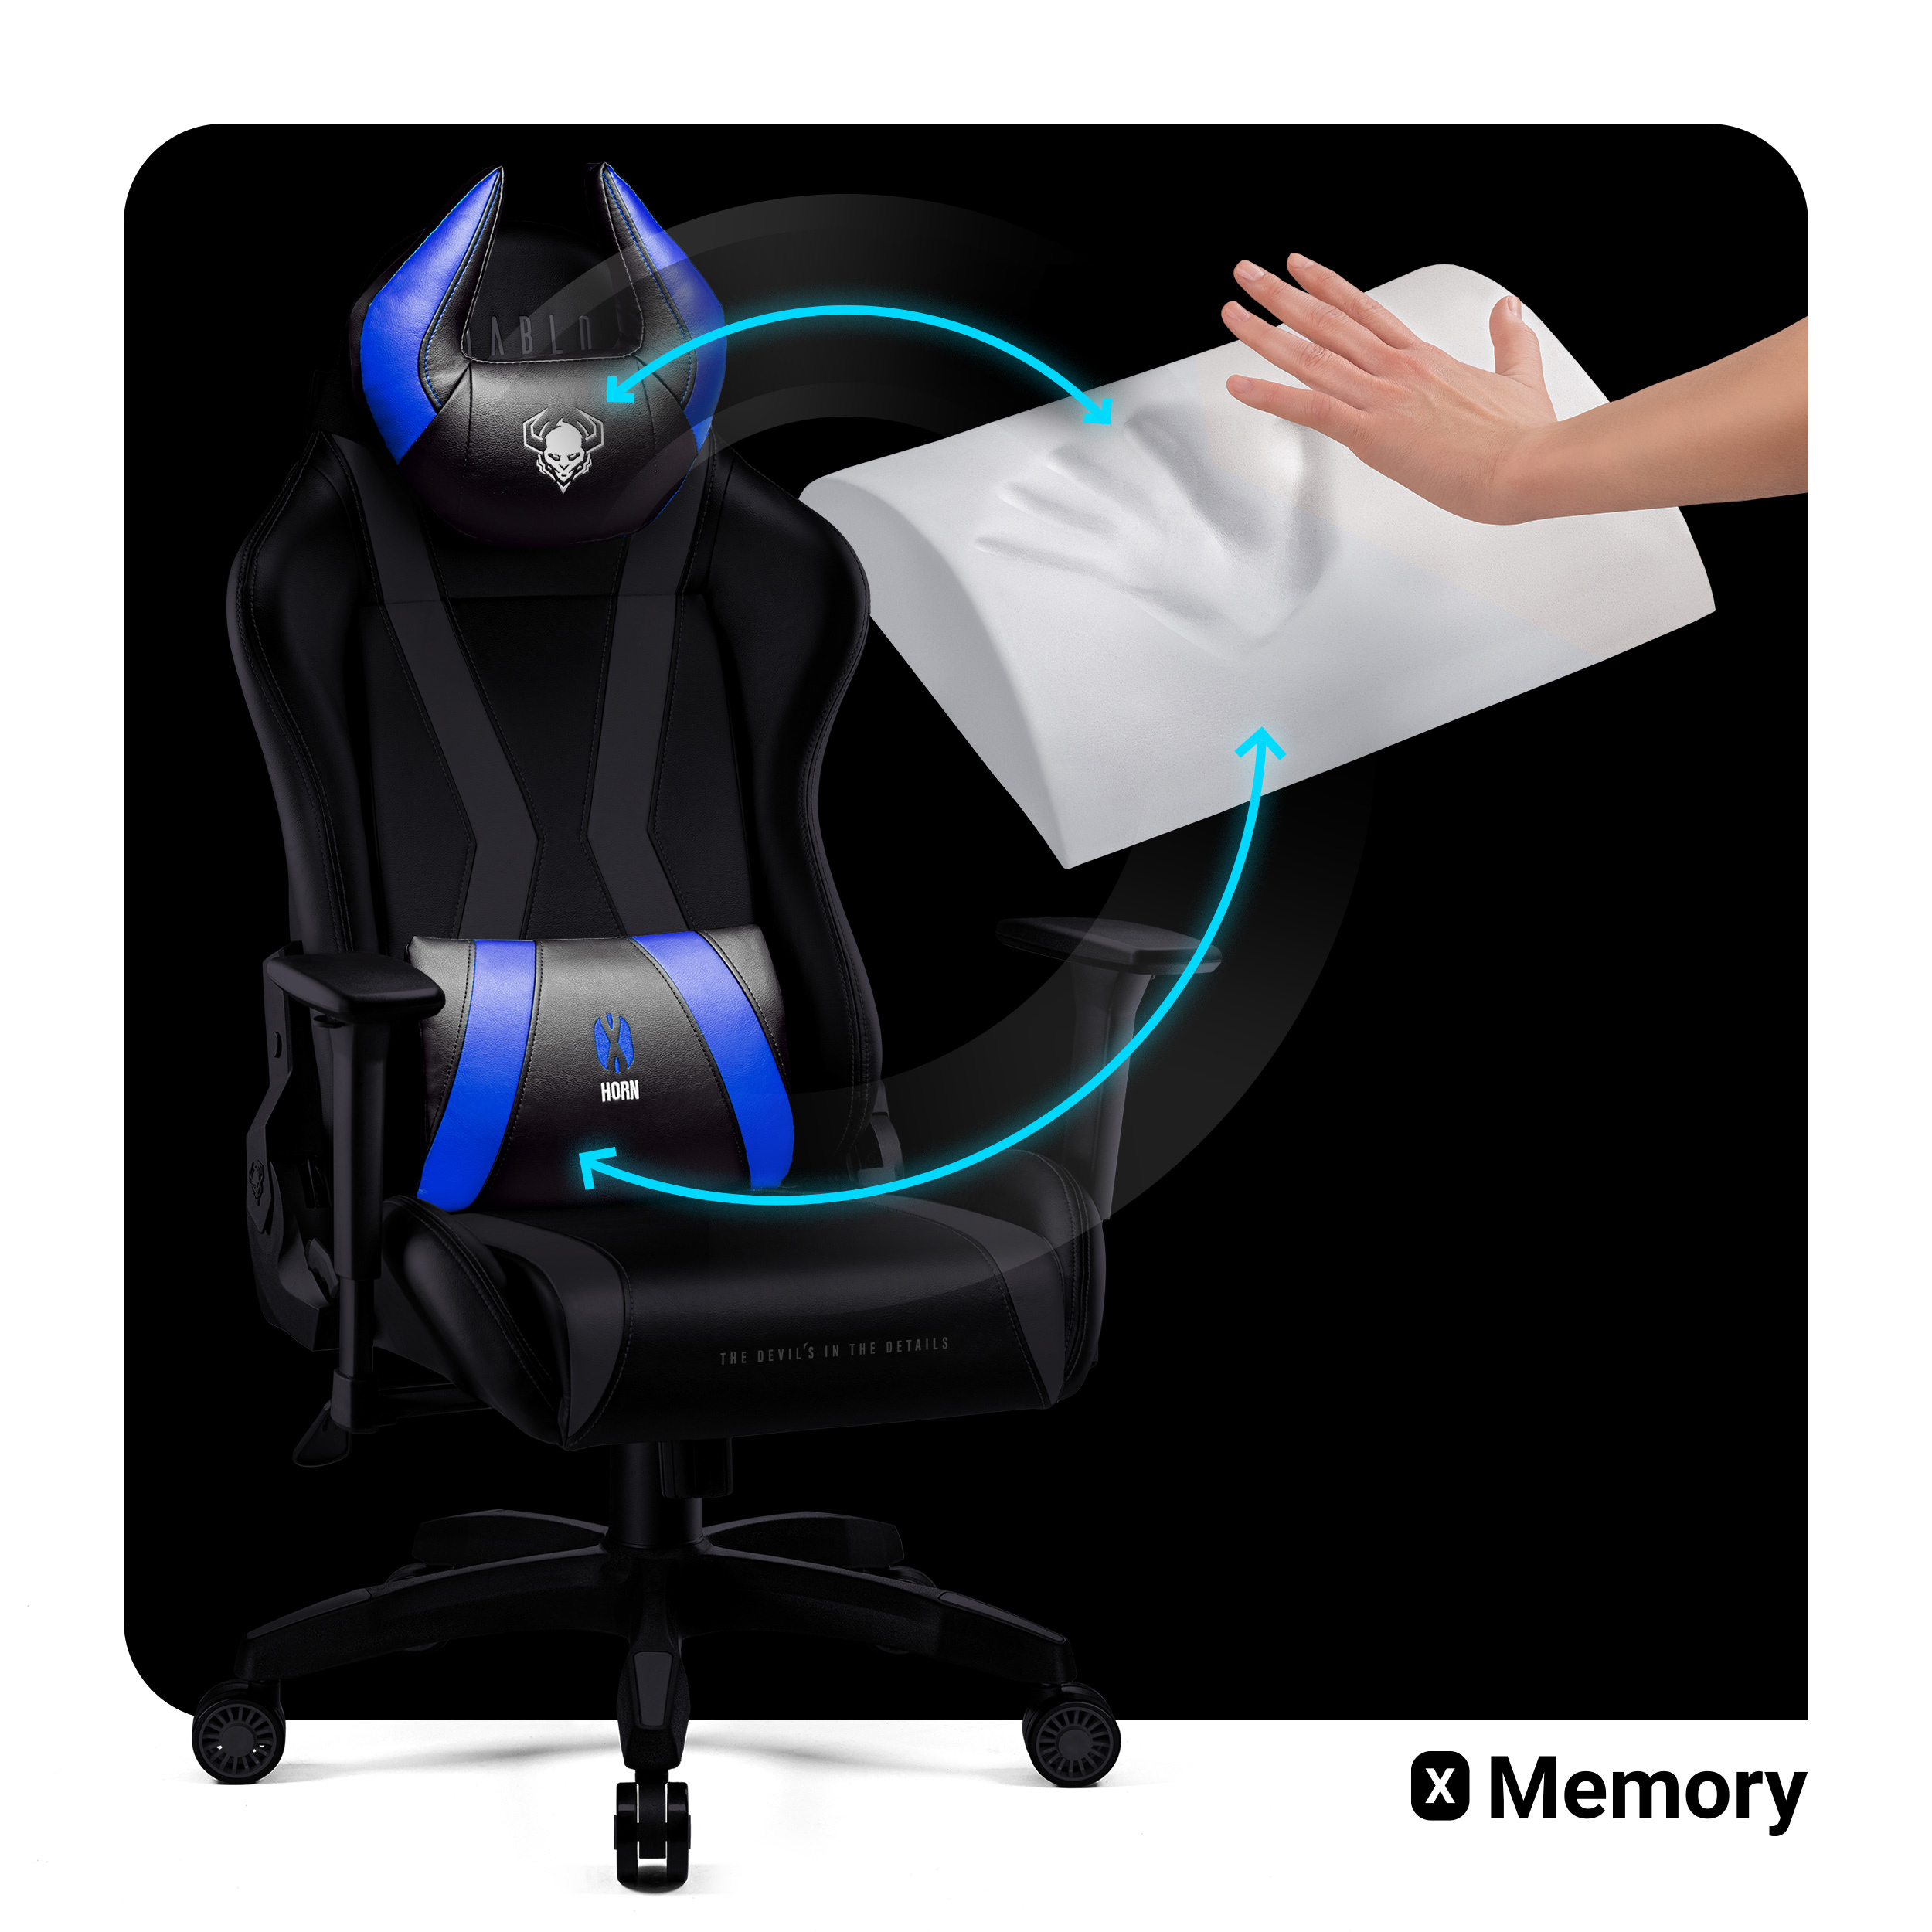 DIABLO CHAIRS GAMING STUHL X-HORN 2.0 black/blue NORMAL Gaming Chair